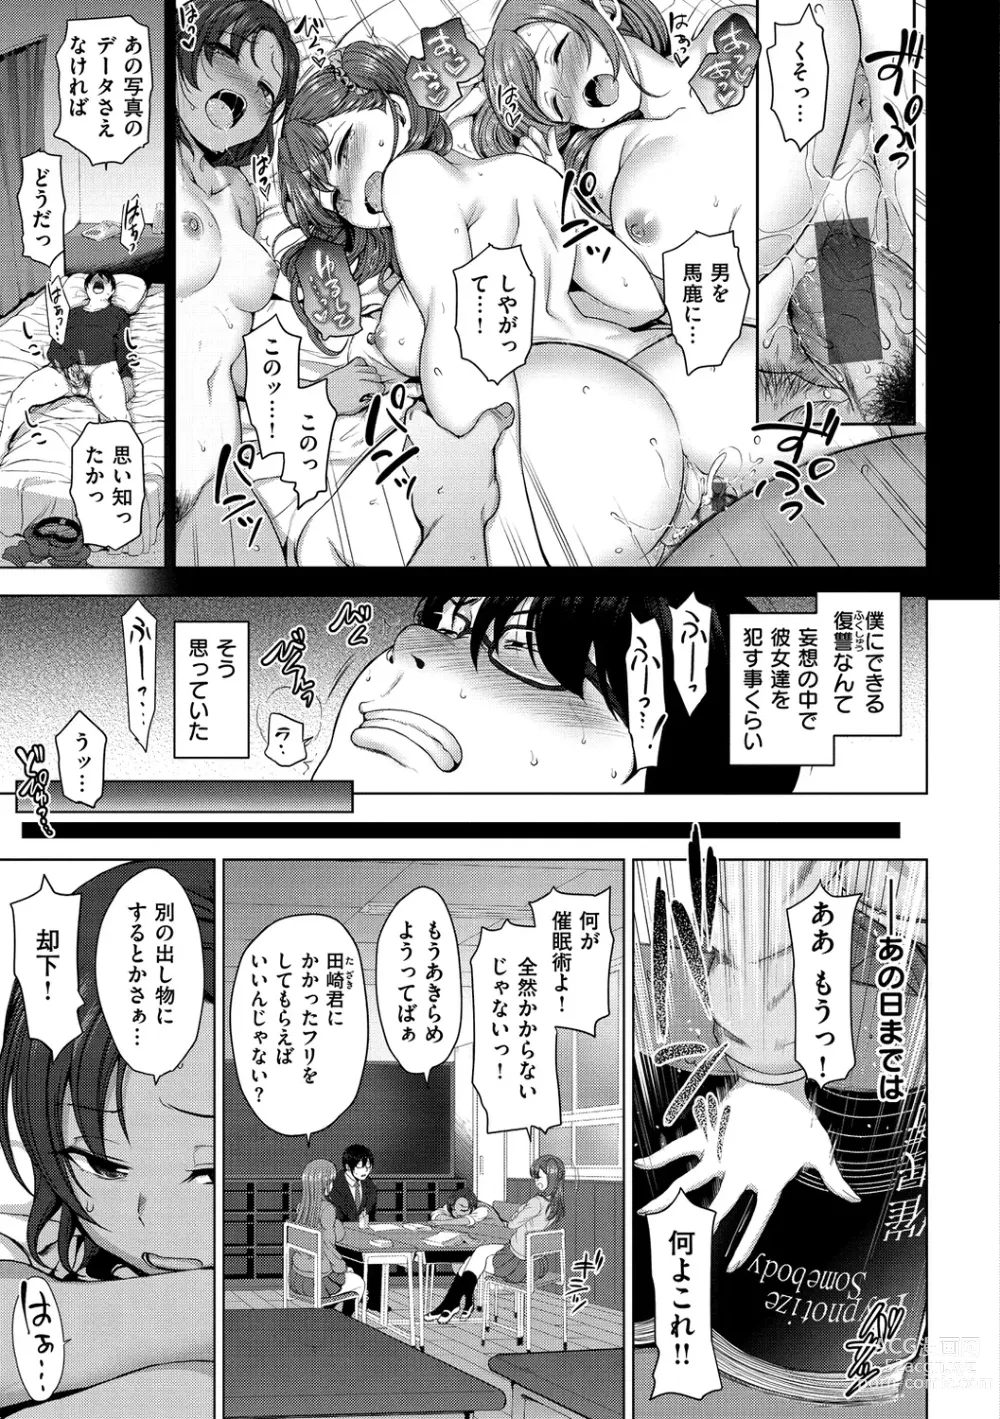 Page 11 of manga Ijirare